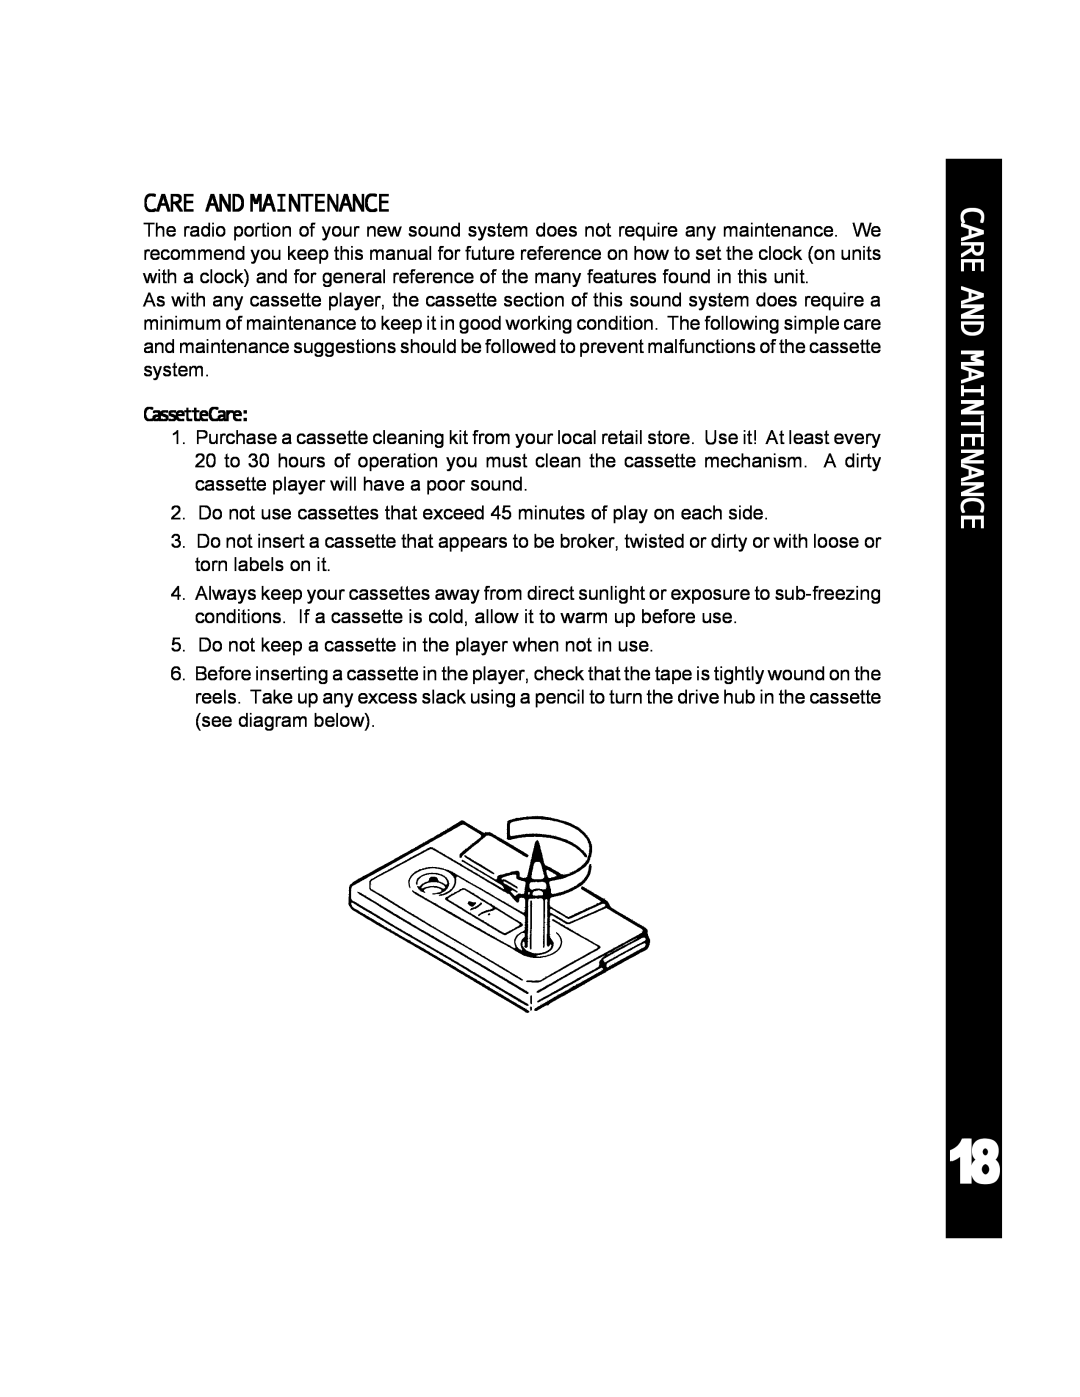 Audiovox 990 manual Care And Maintenance, Care Andmaintenance, CassetteCare 